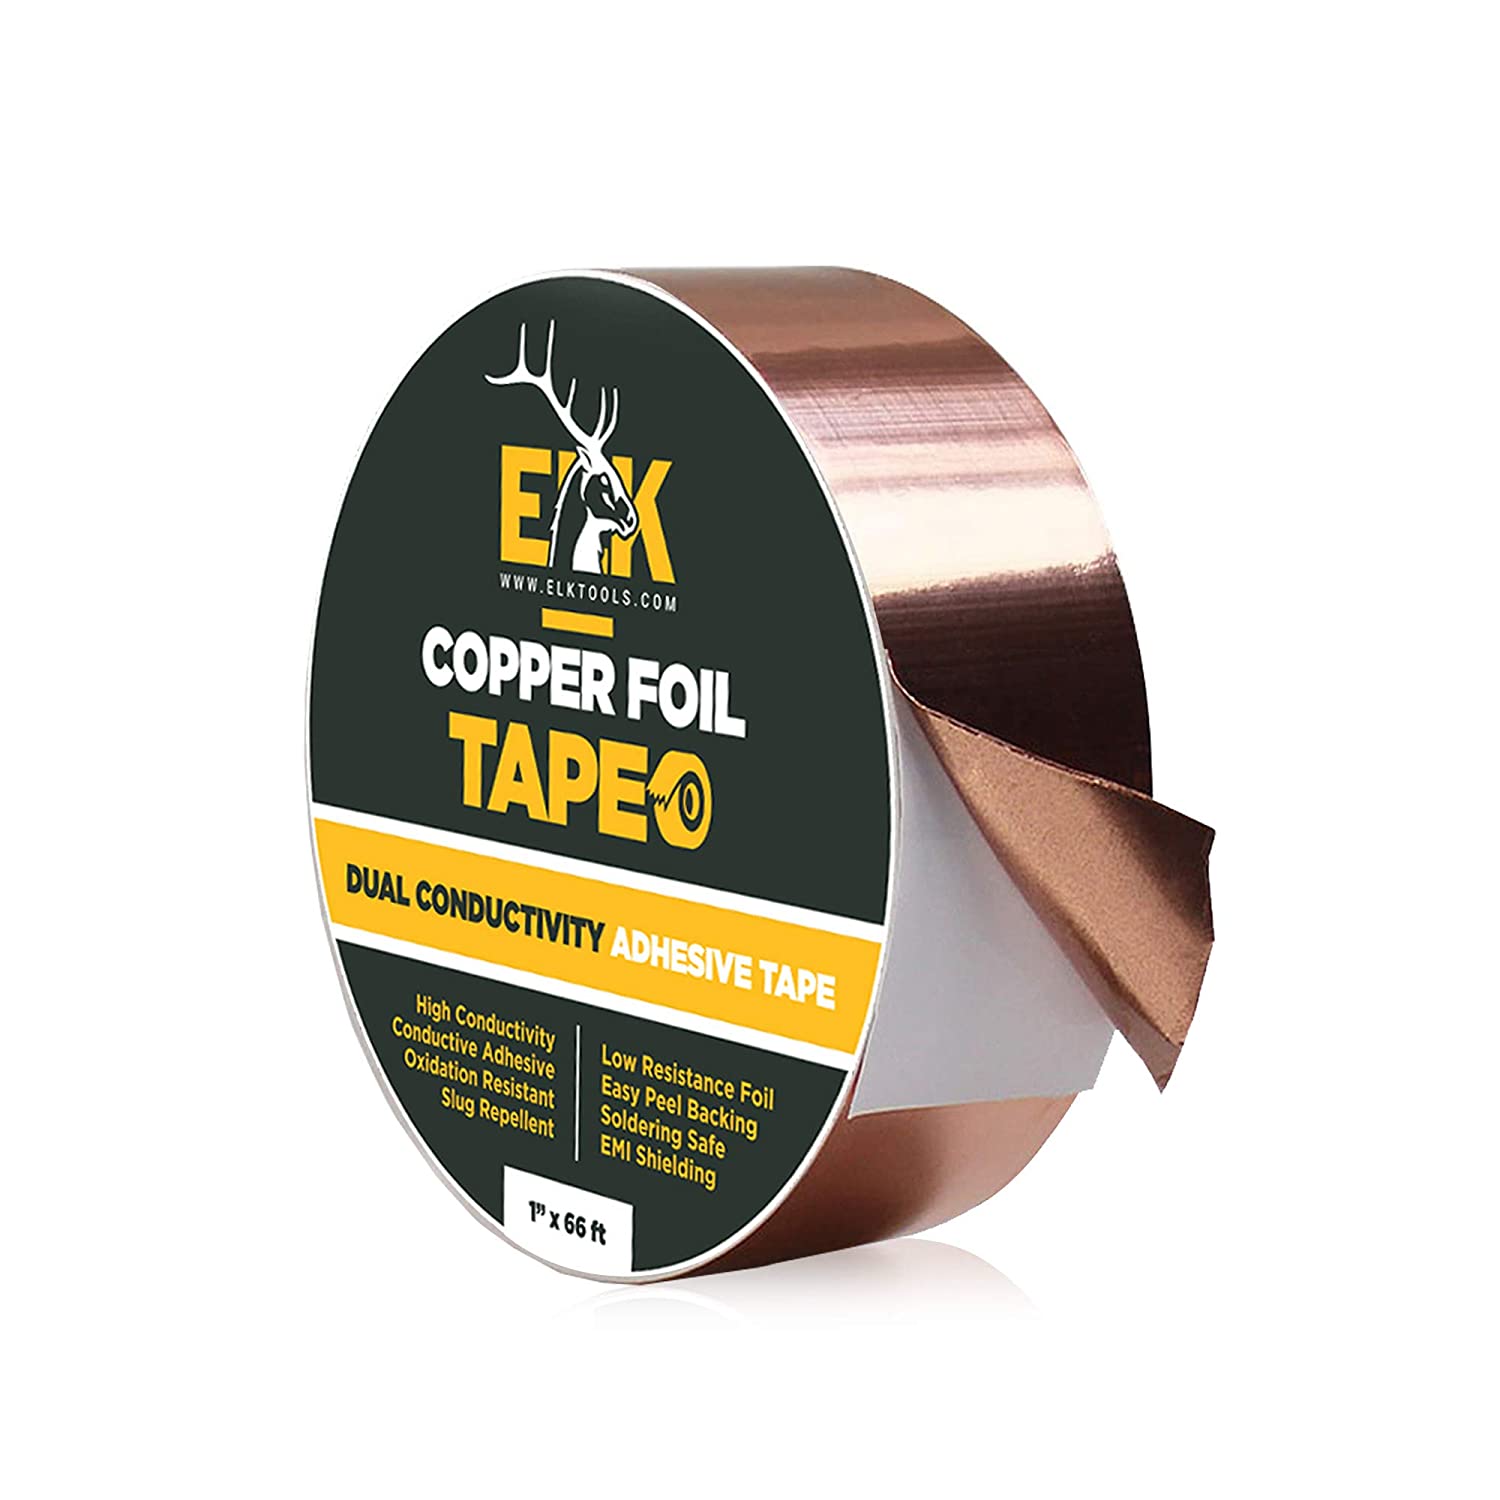 5x Copper Foil Tape Paper w/ Conductive Adhesive for Guitar & EMI Shielding 